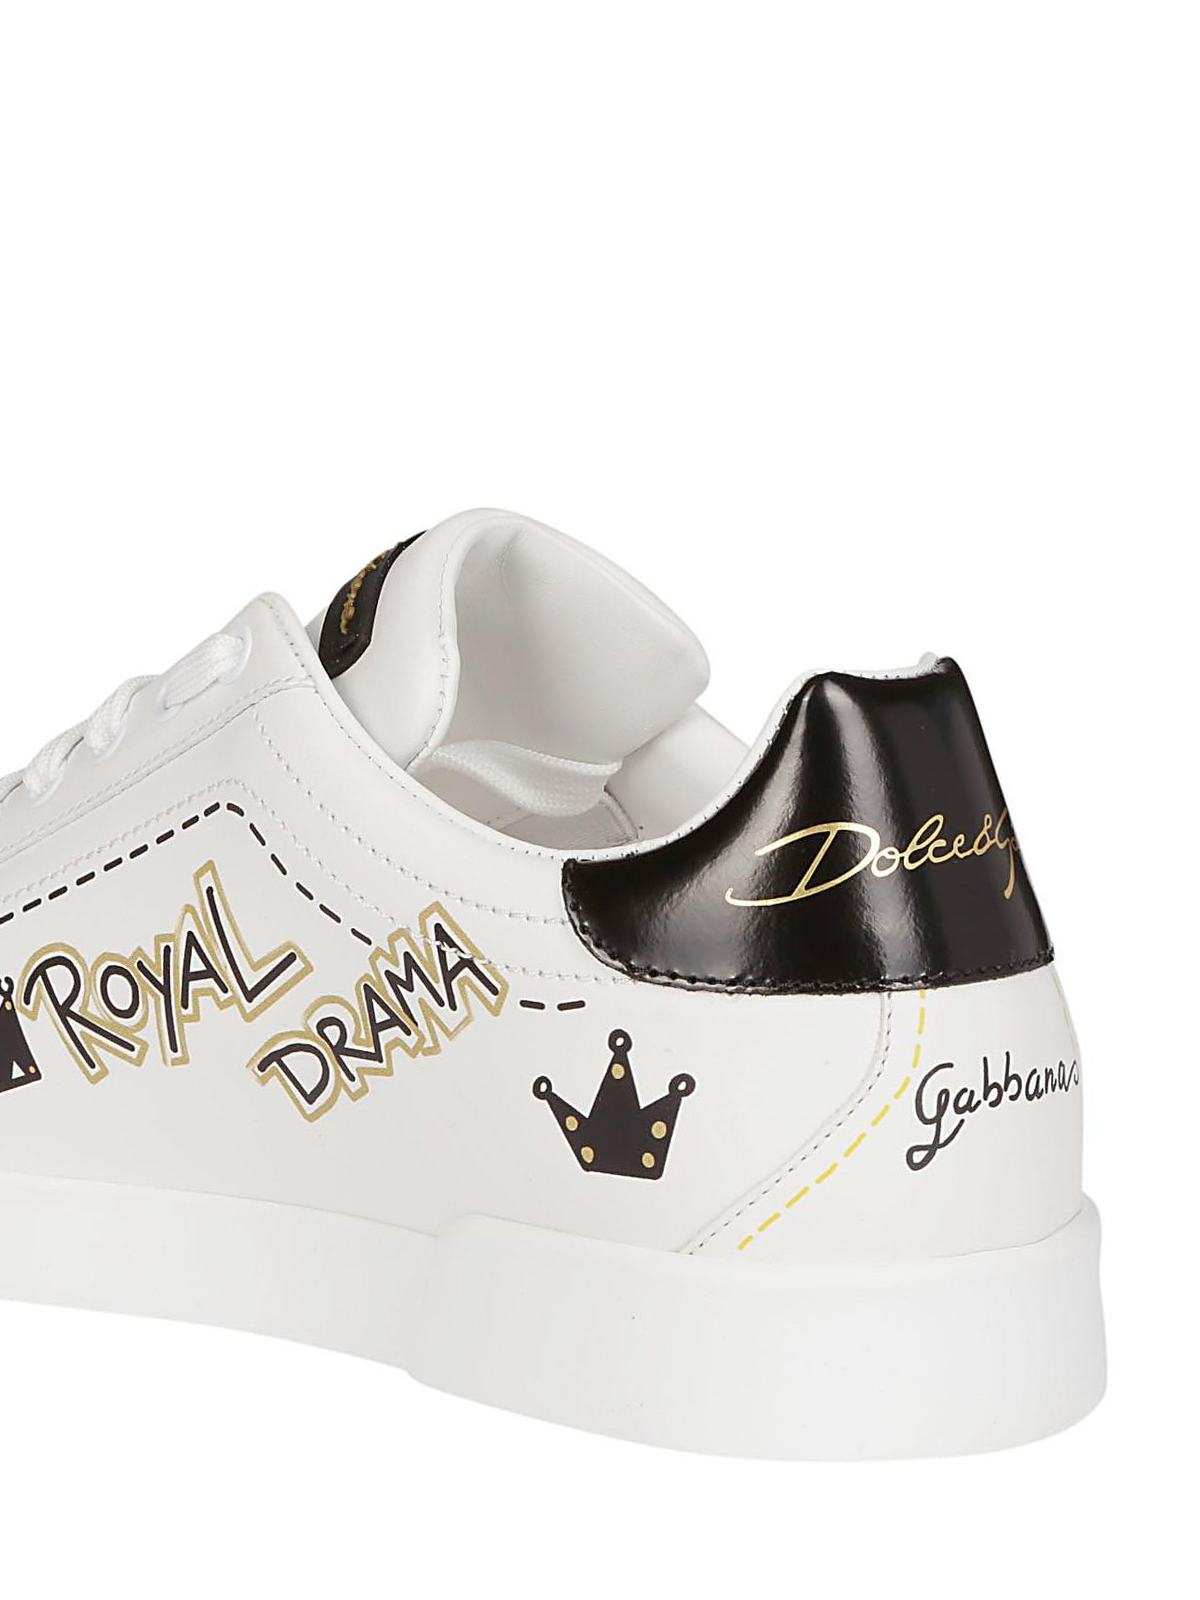 dolce gabbana royal shoes